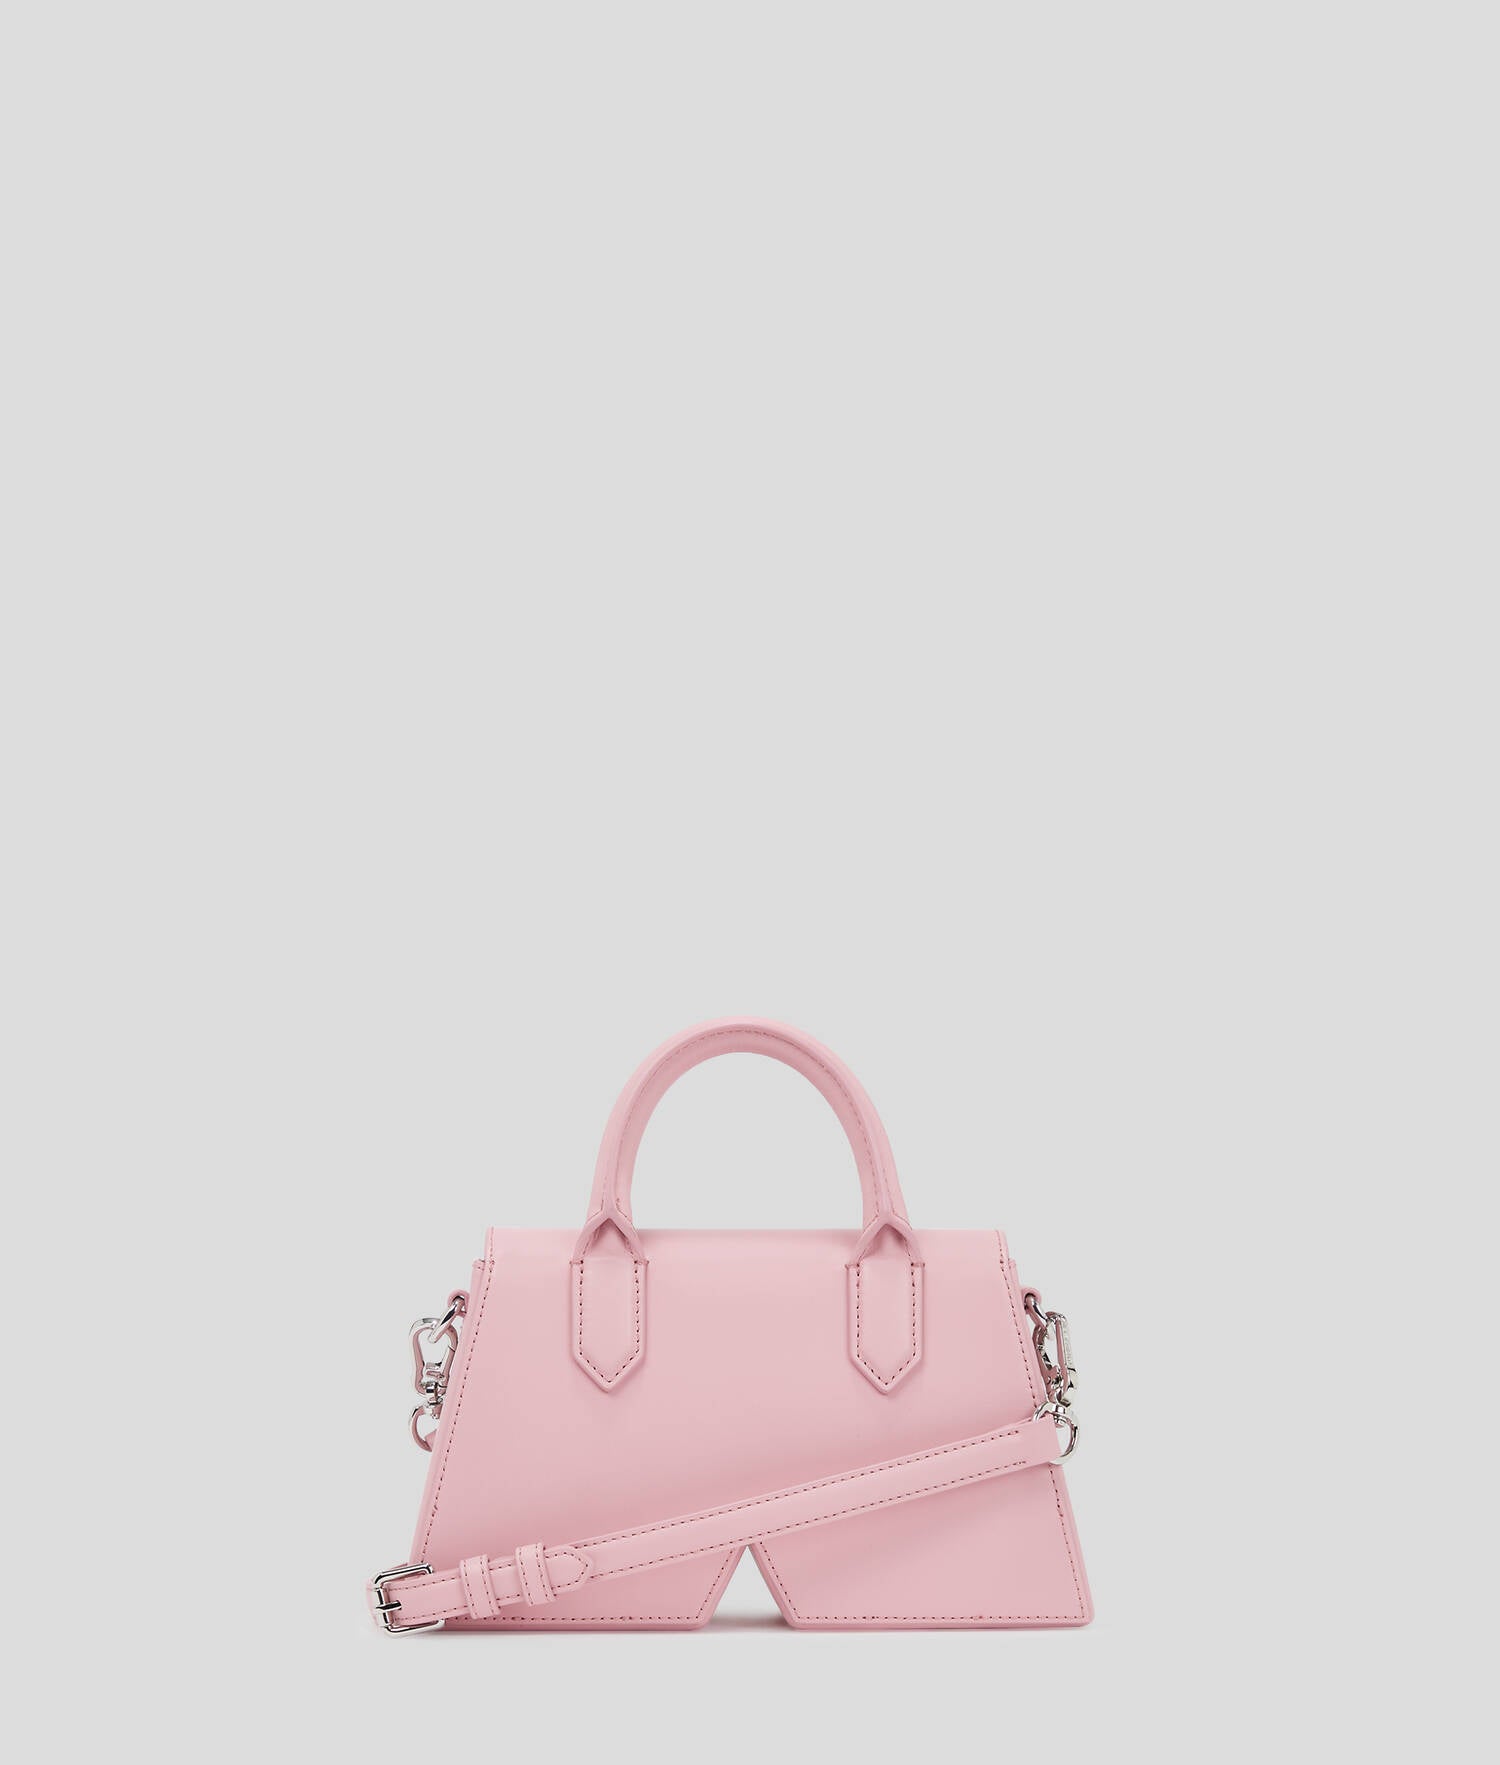 Karl Lagerfeld 235W3043 Ik/K Leather Crossbody Bag Pink